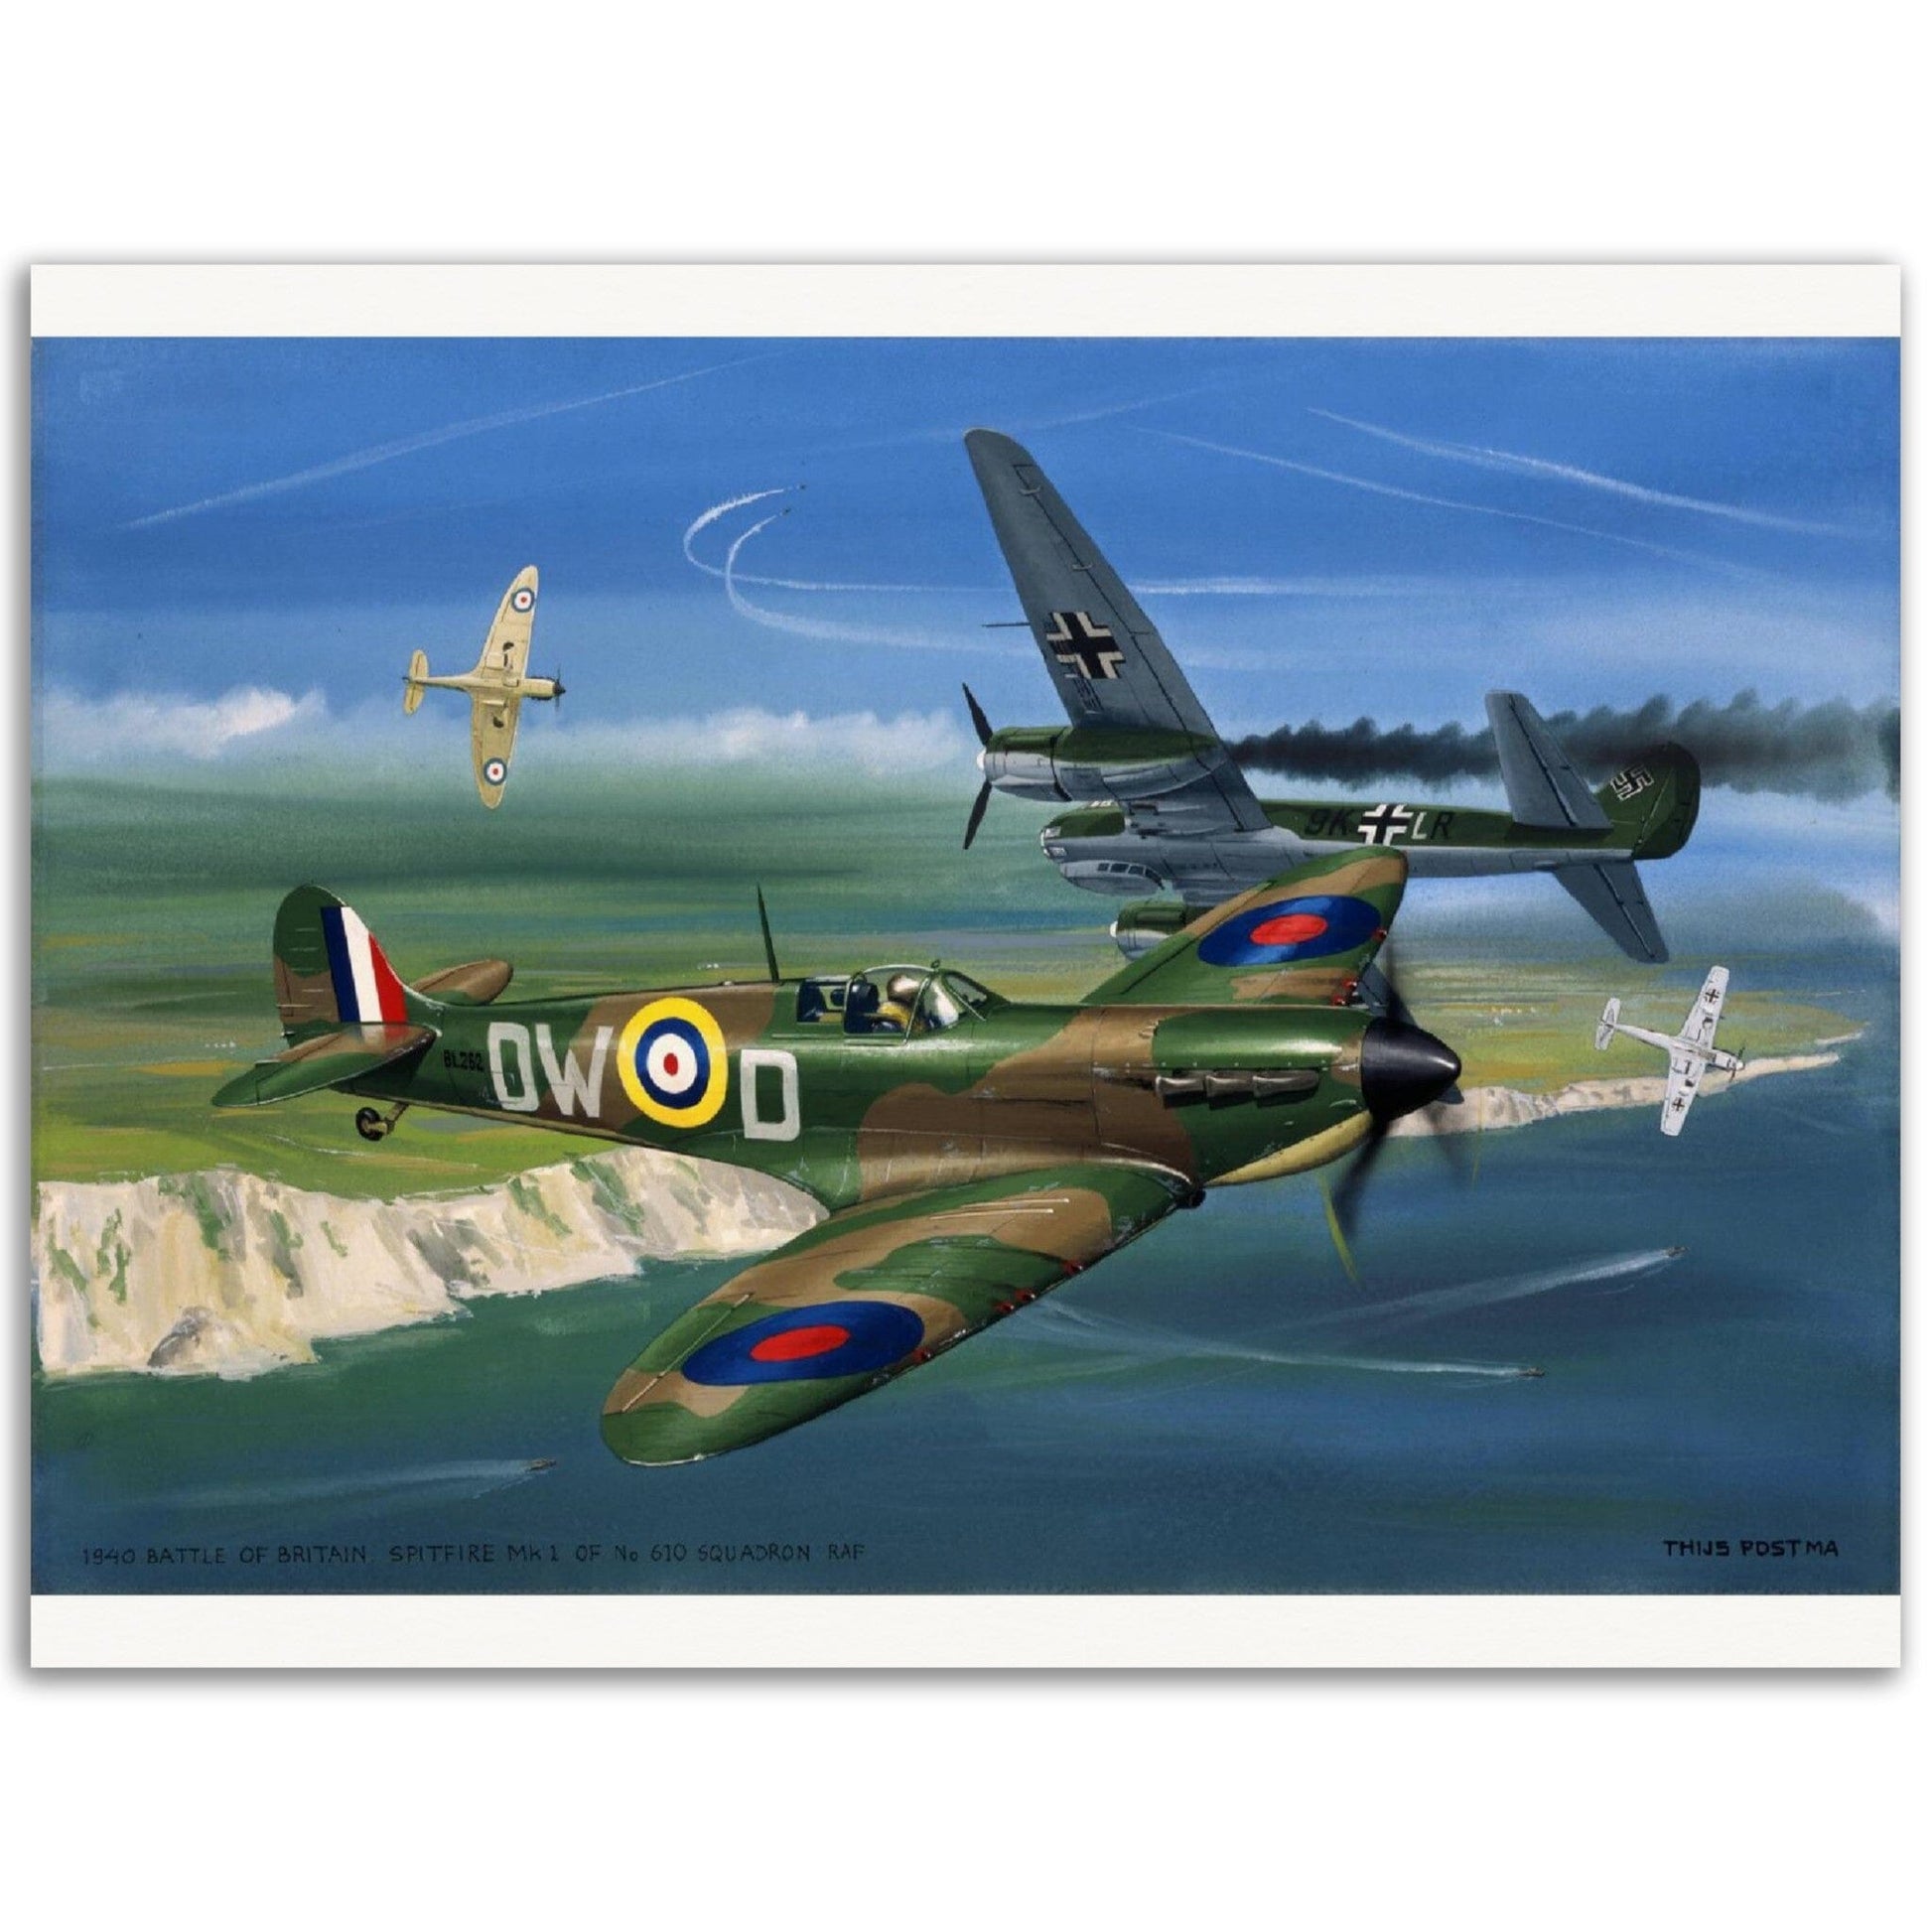 Thijs Postma - Poster - Supermarine Spitfire Mk.1 Battle Of Britain Poster Only TP Aviation Art 60x80 cm / 24x32″ 